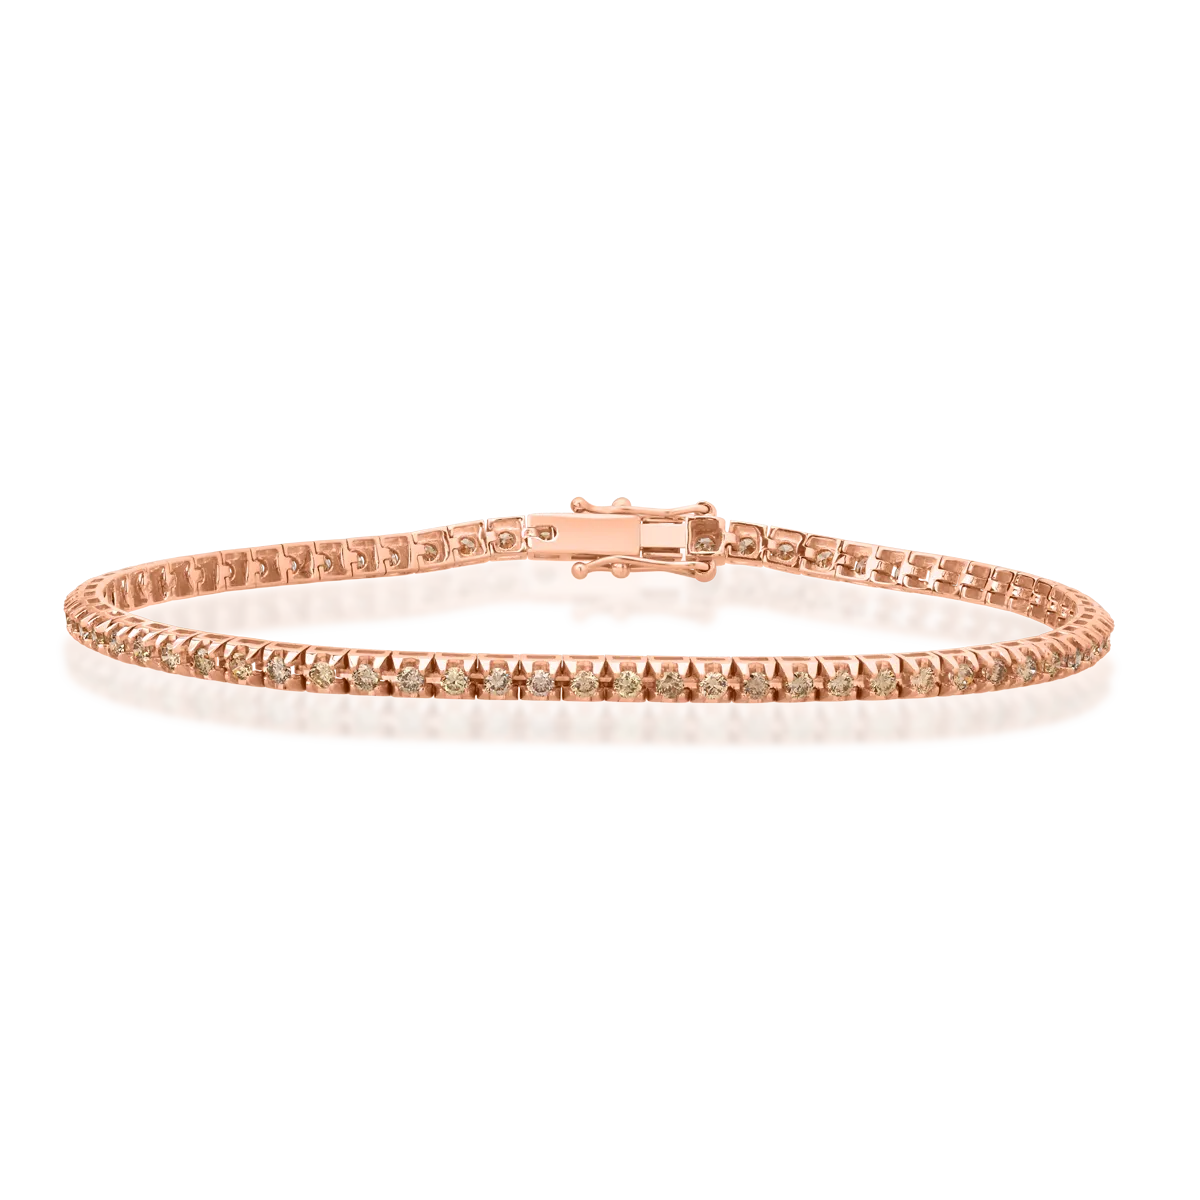 18K rose gold tennis bracelet with 0.7ct brown diamonds